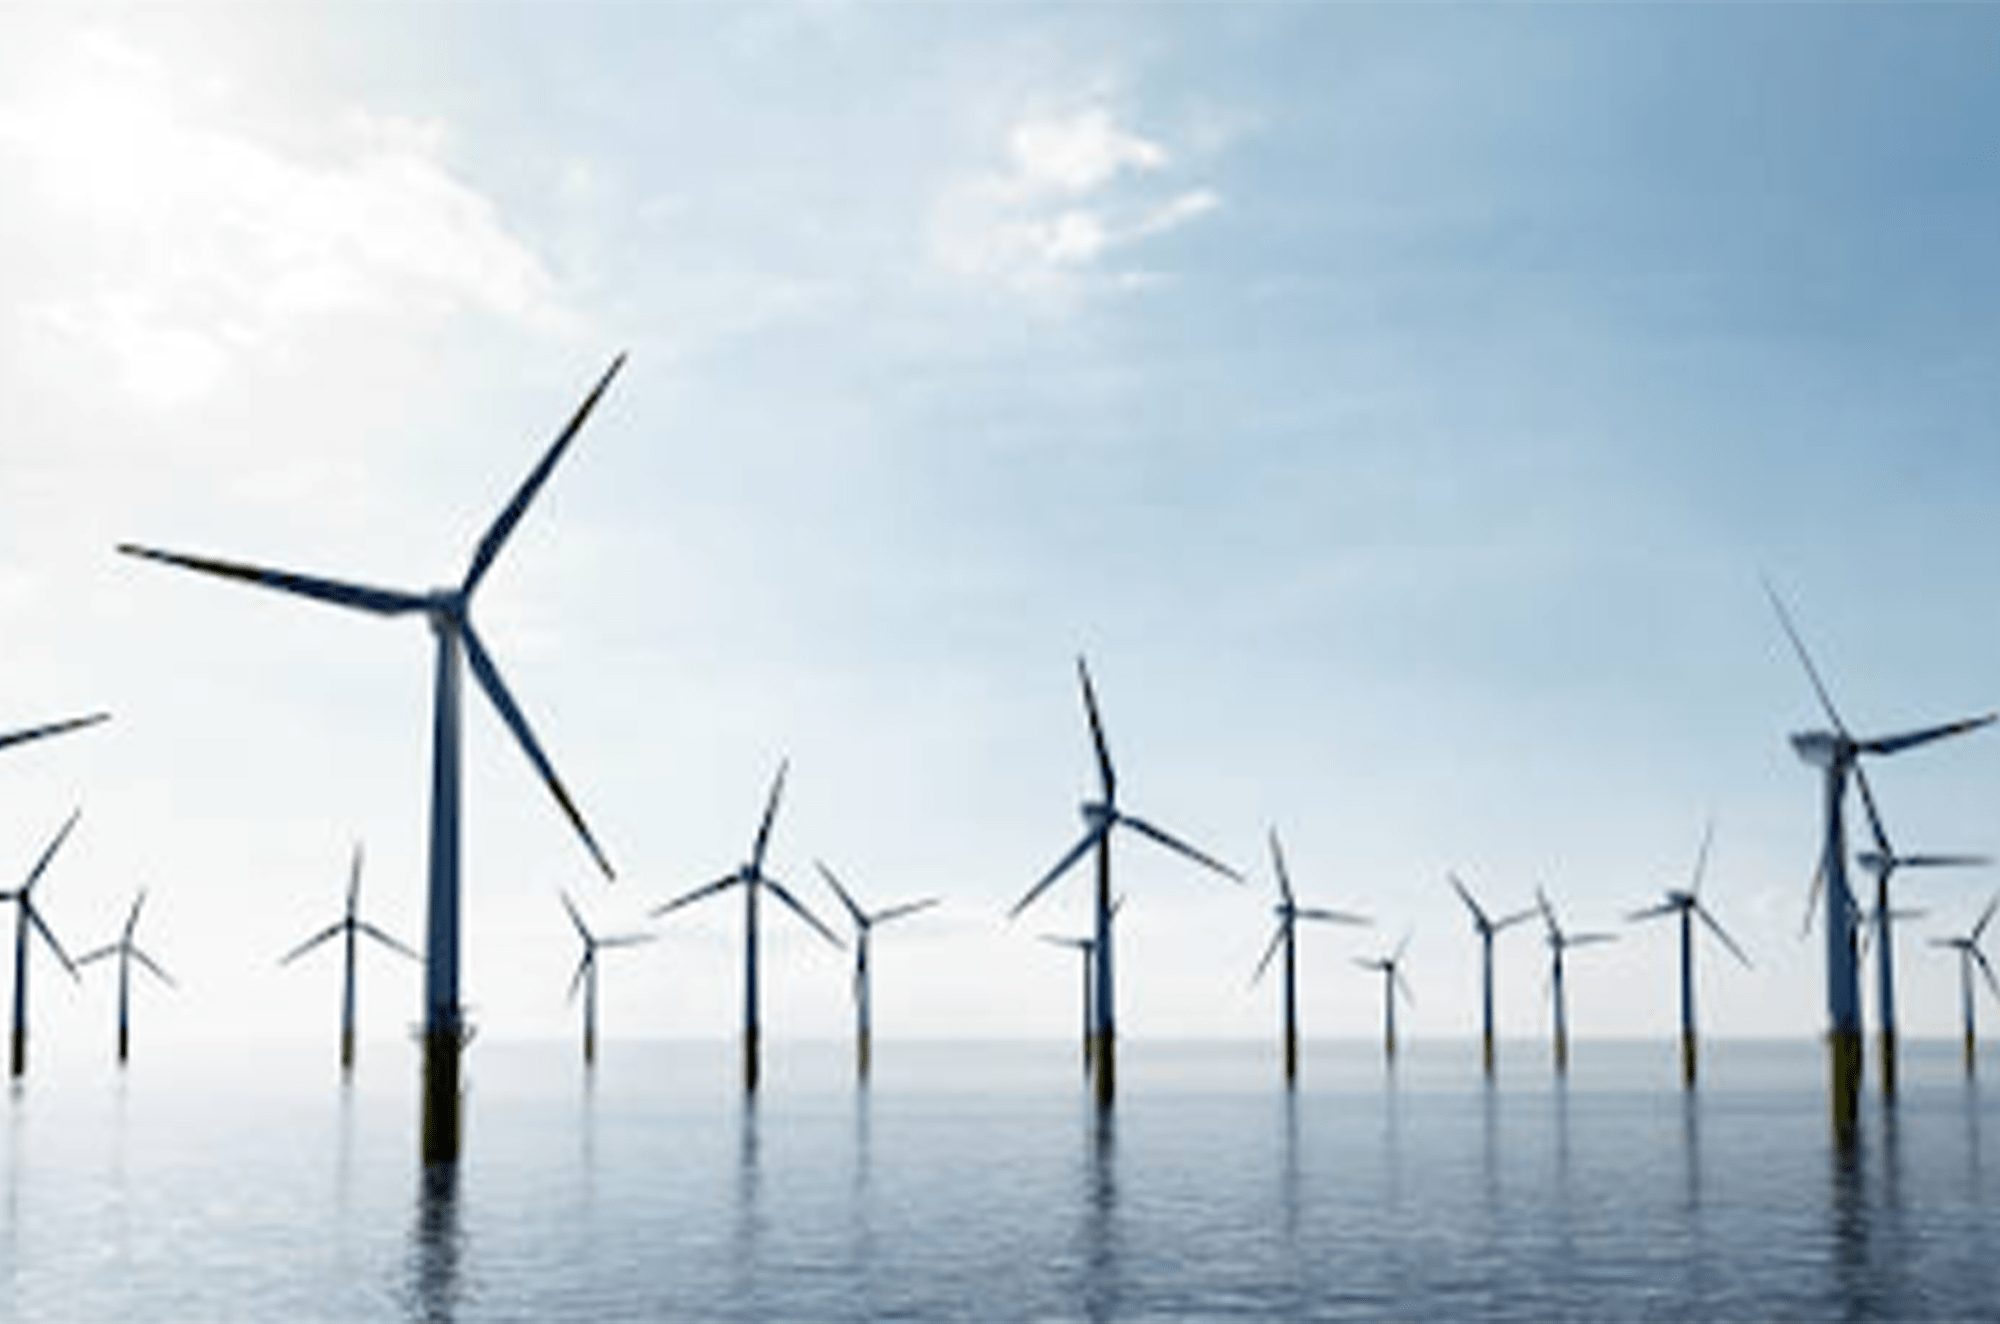 Wind turbines in water